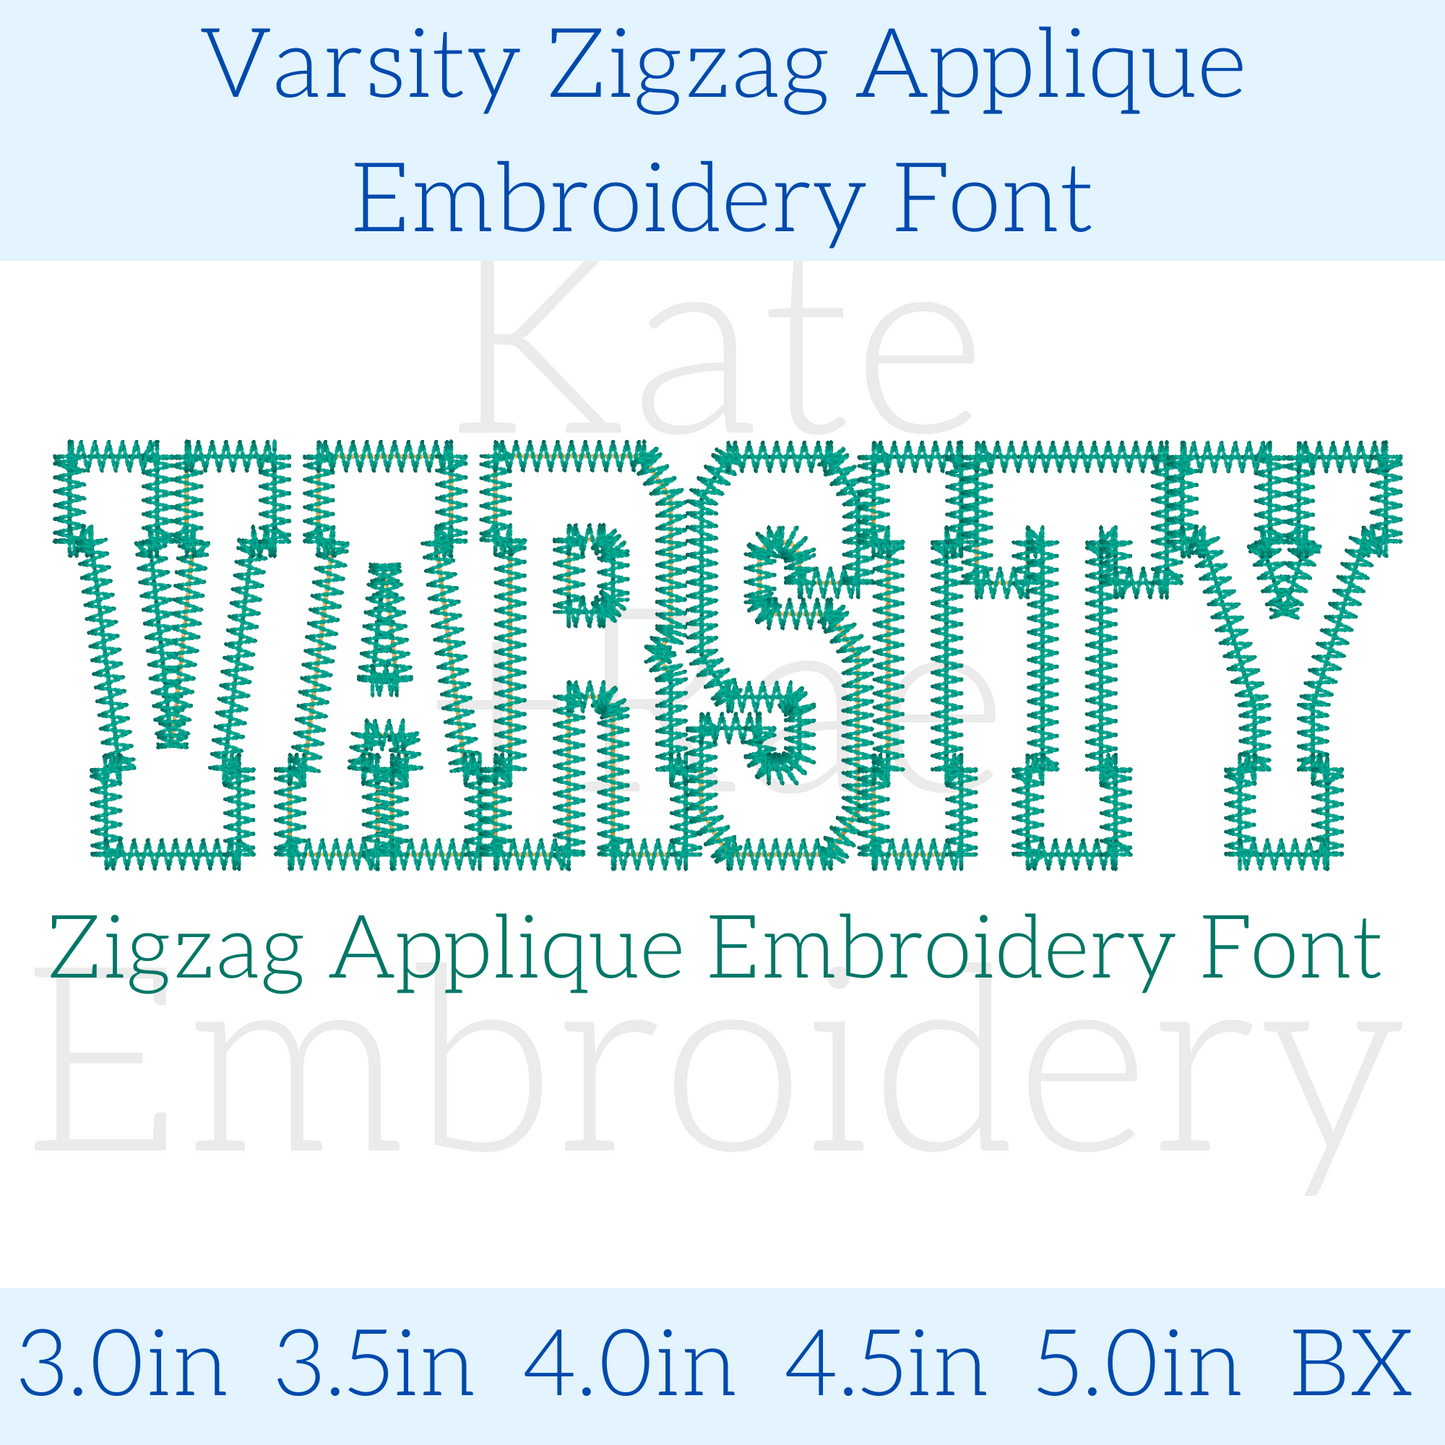 Varsity Zigzag Stitch Applique Embroidery Font